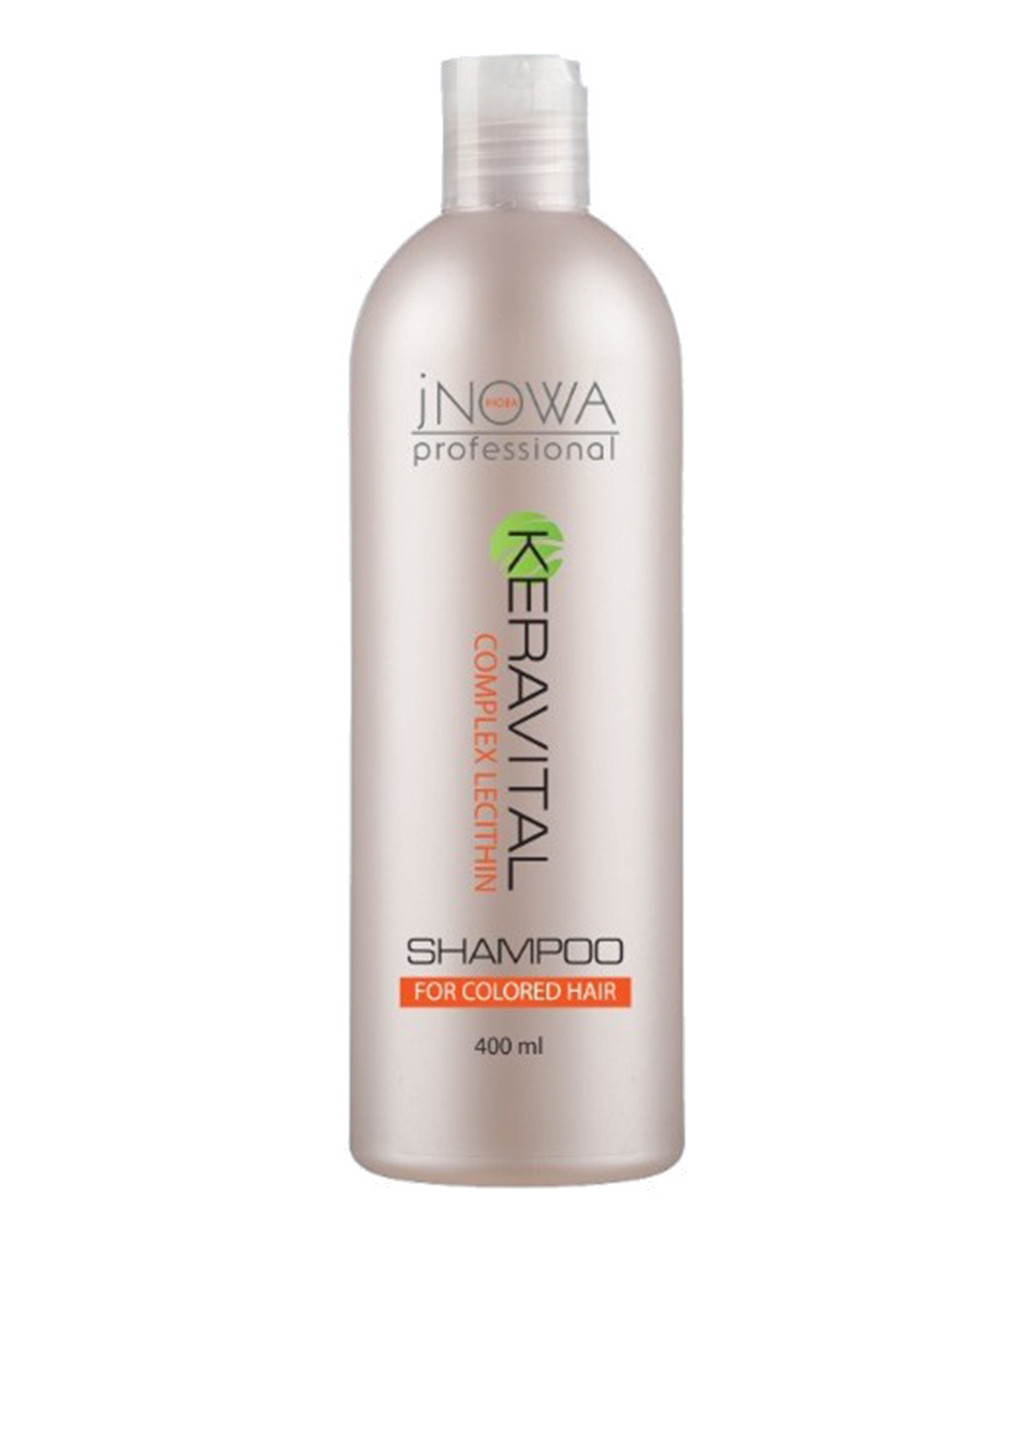 Шампунь для окрашенных волос KeraVital Shampoo 400 мл jNOWA Professional (88092360)